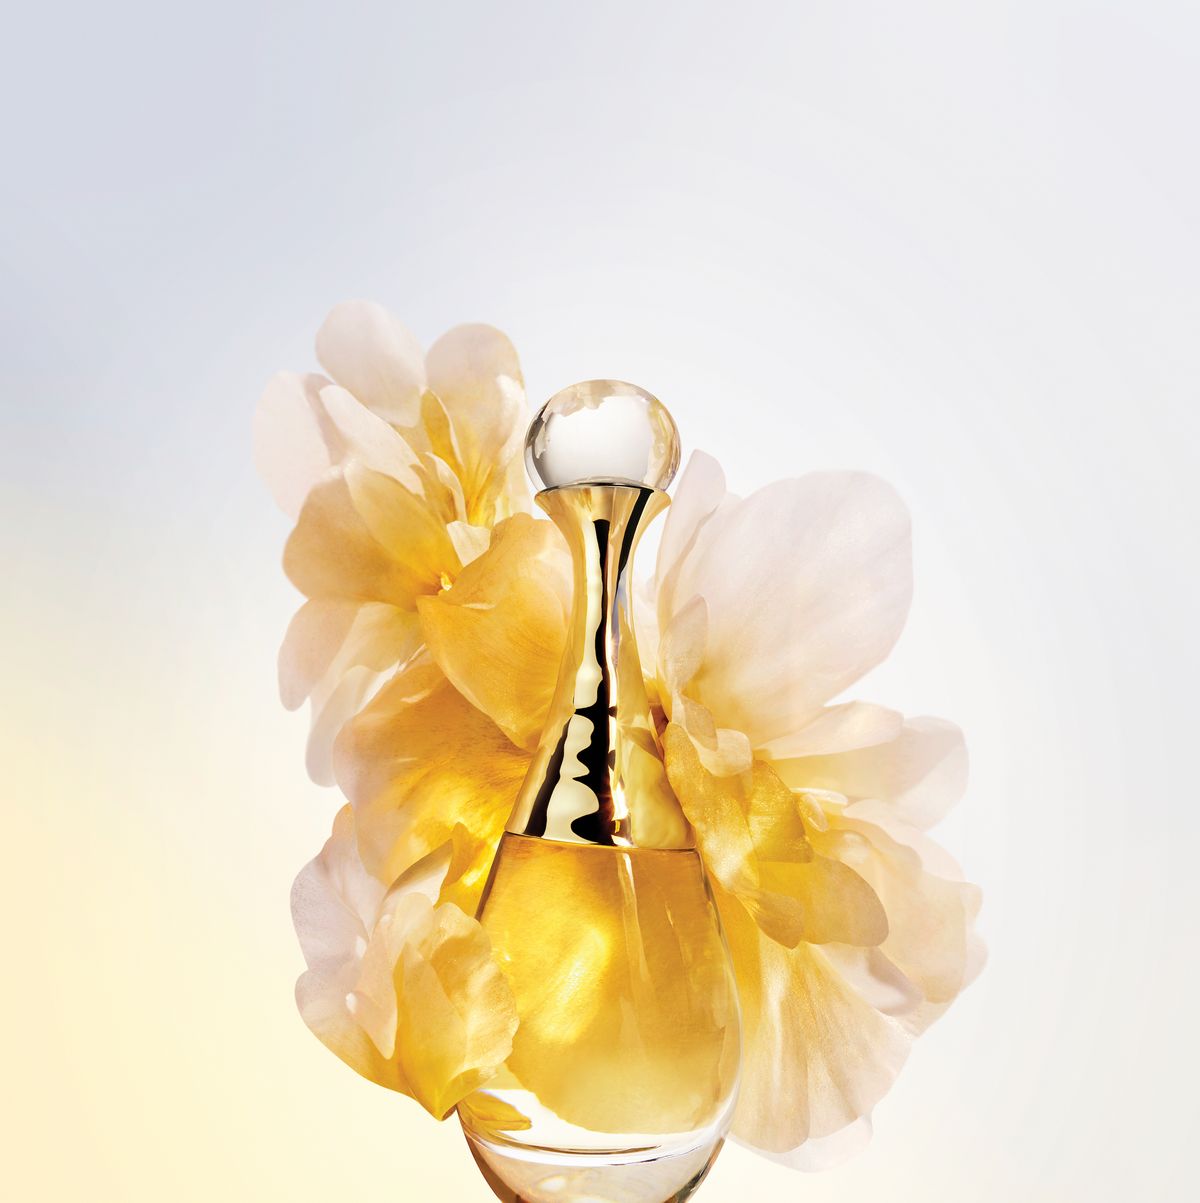 Carmen kass christian dior jadore perfume by Dior